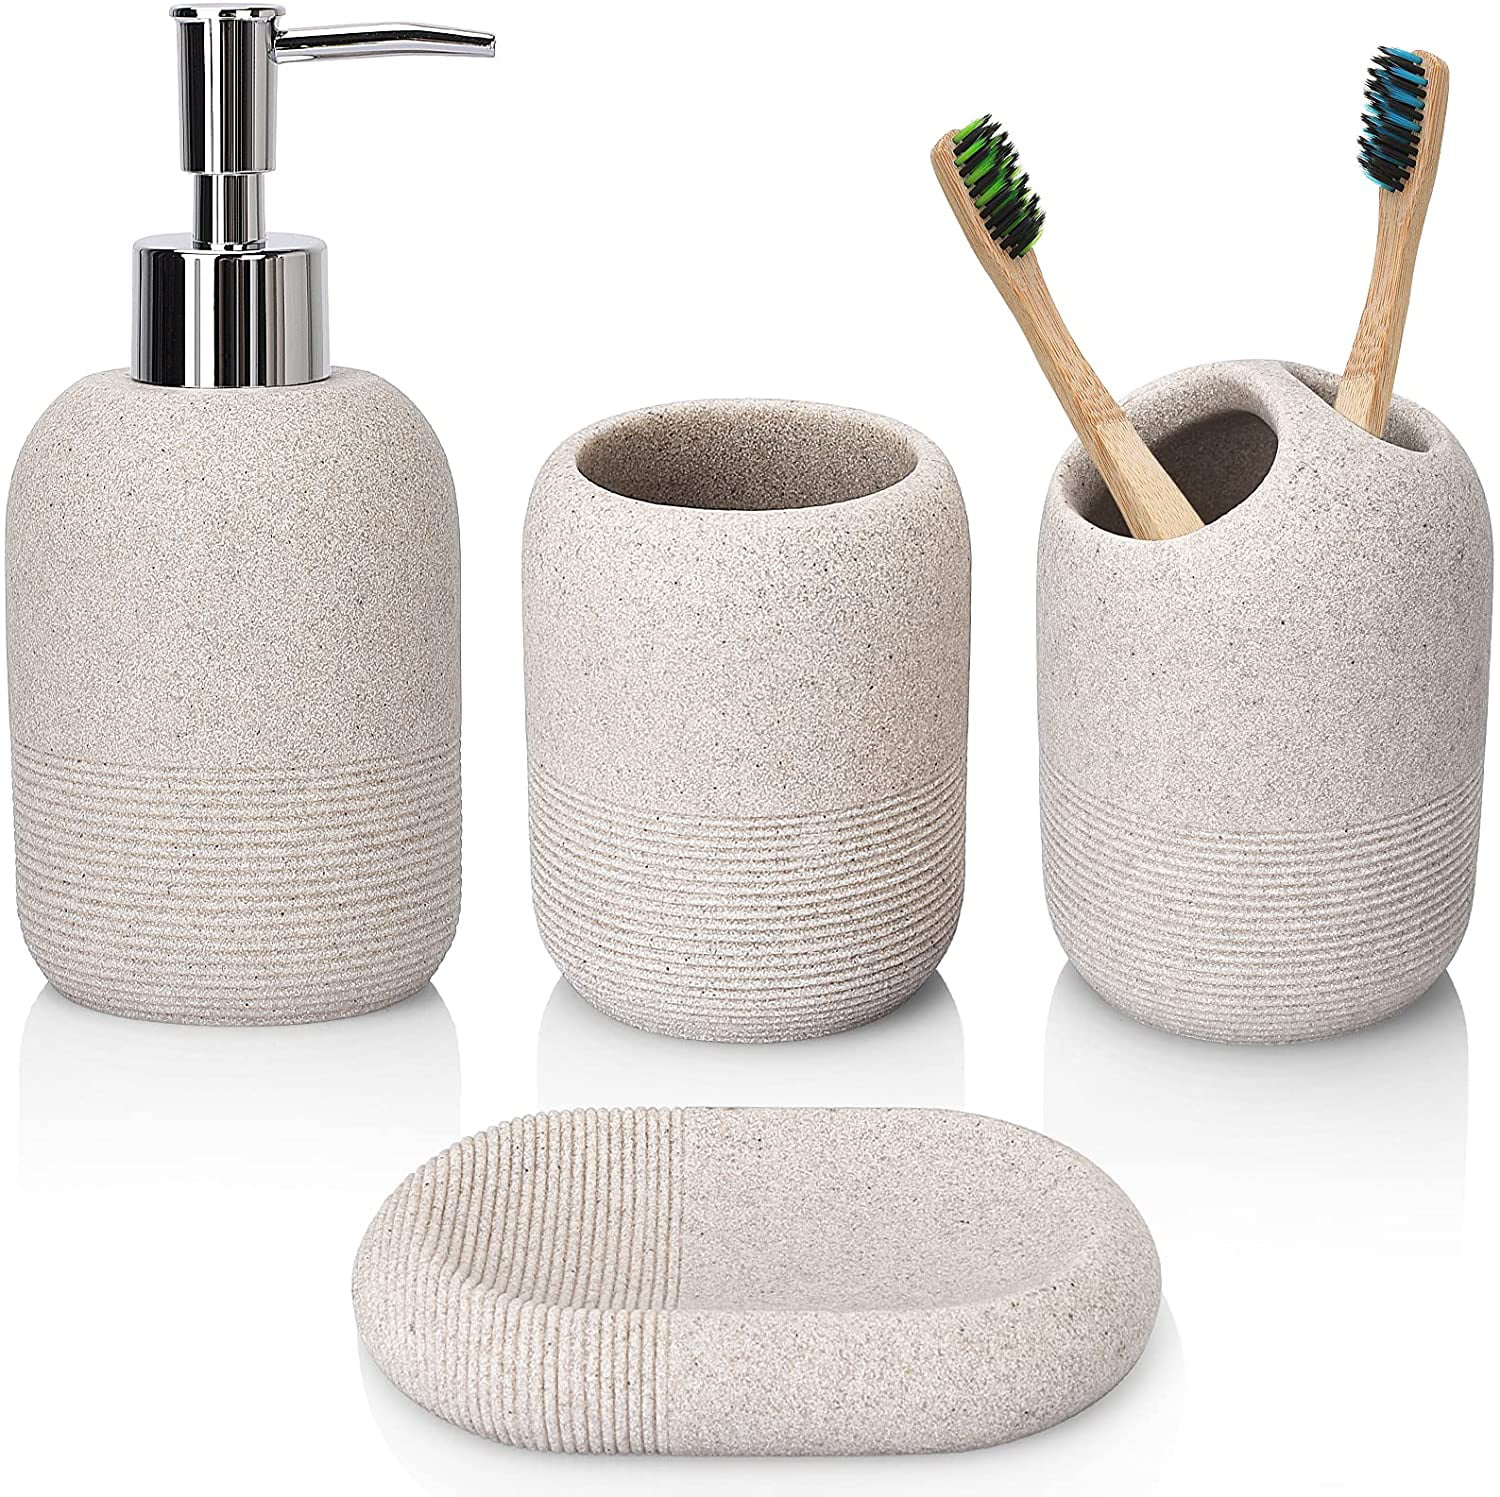 Set 4 Piece Ceramic Bathroom Accessories Grey Toilet Brush Soap Dispenser Holder 